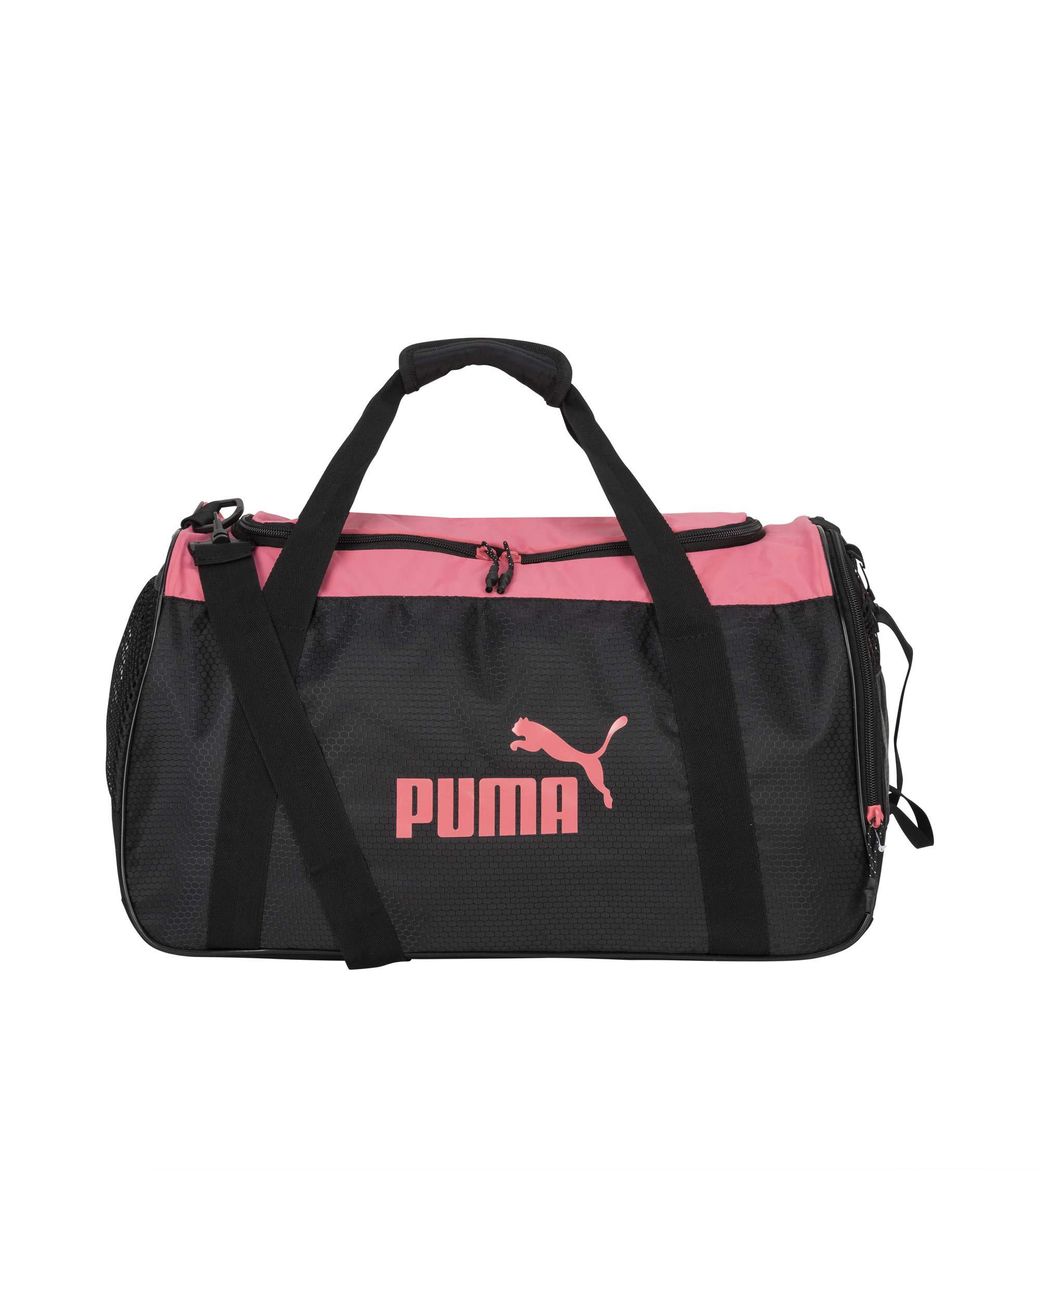 PUMA Defense Duffel Bag in Black Combo (Black) - Save 12% | Lyst